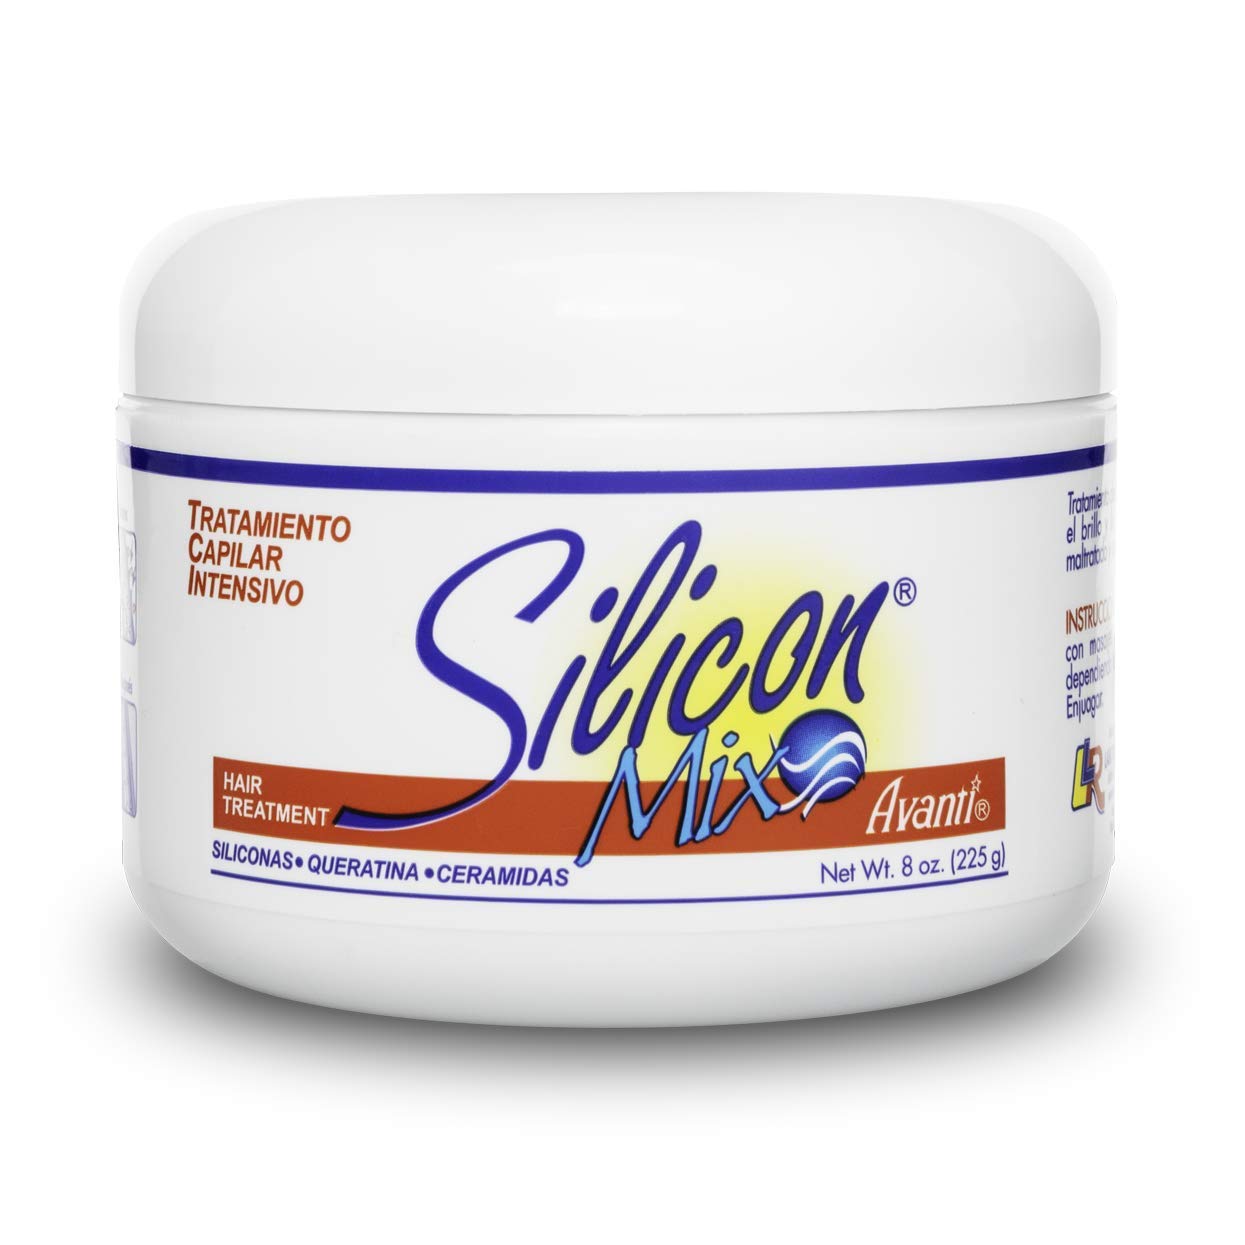 Silicon Mix Intensive Hair Treatment 16 oz